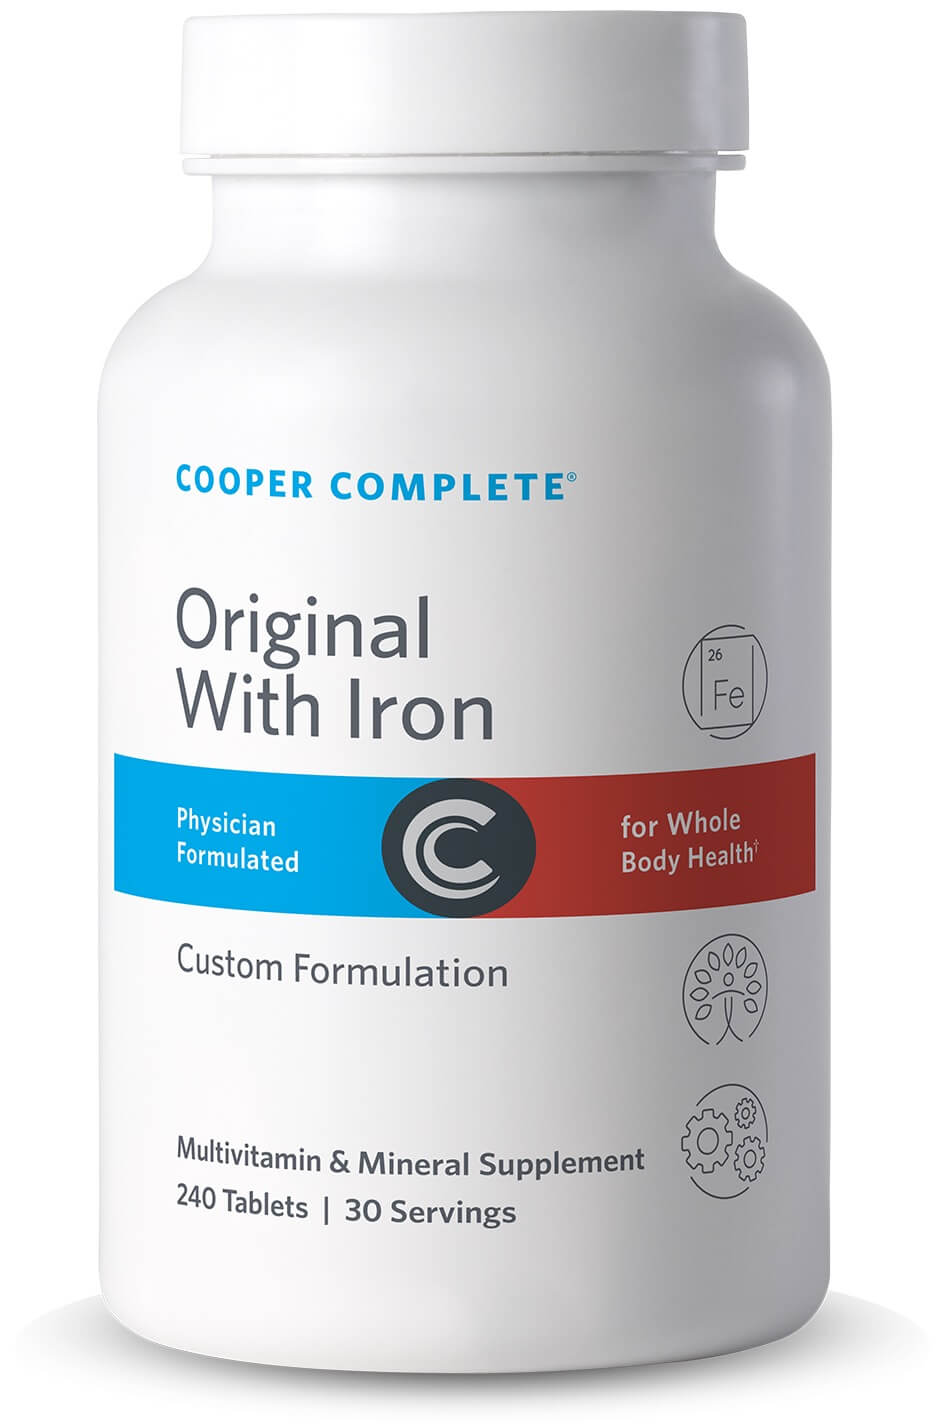 Photo of Cooper Complete Original Comprehensive Multivitamin With Iron Supplement bottle.